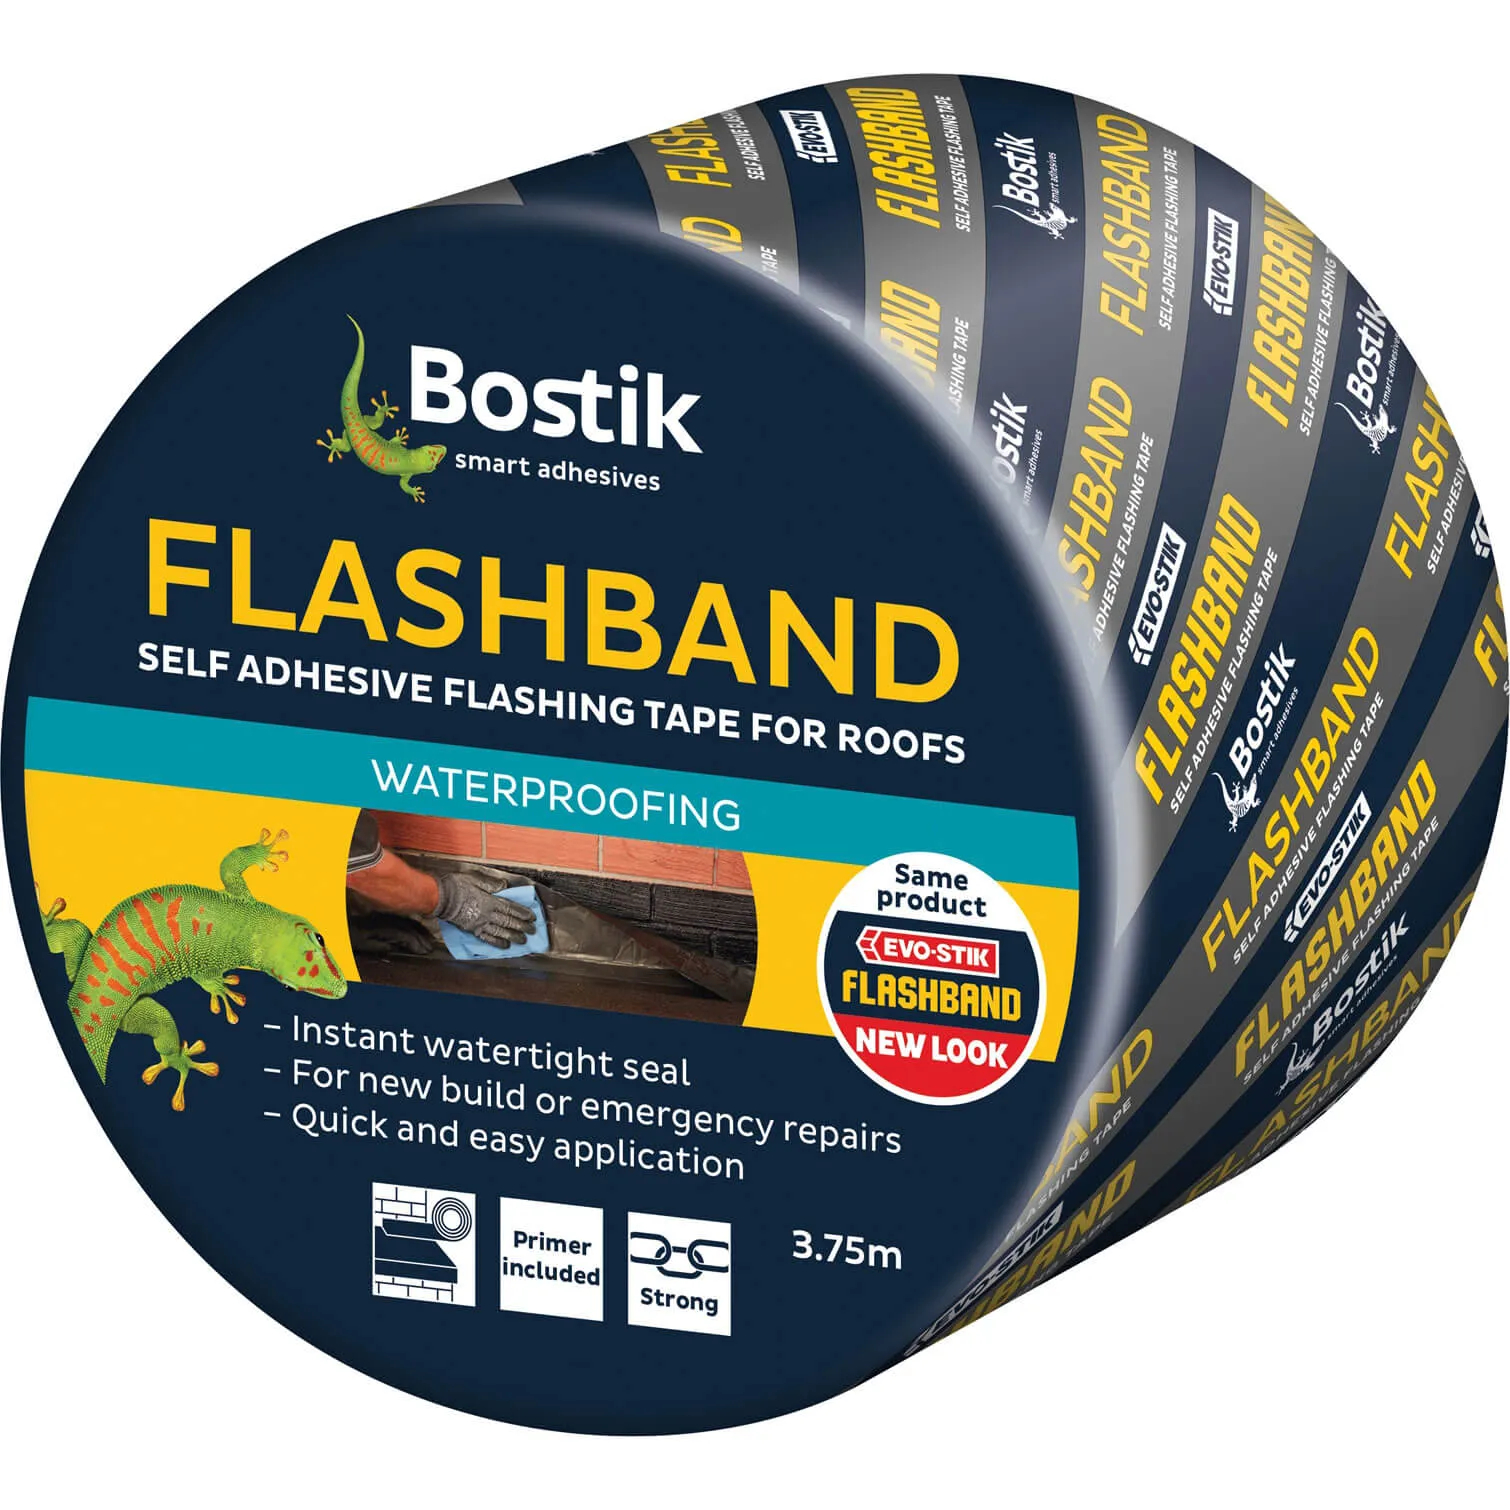 Evo-stik Flashband and Primer - 75mm, 3.75m